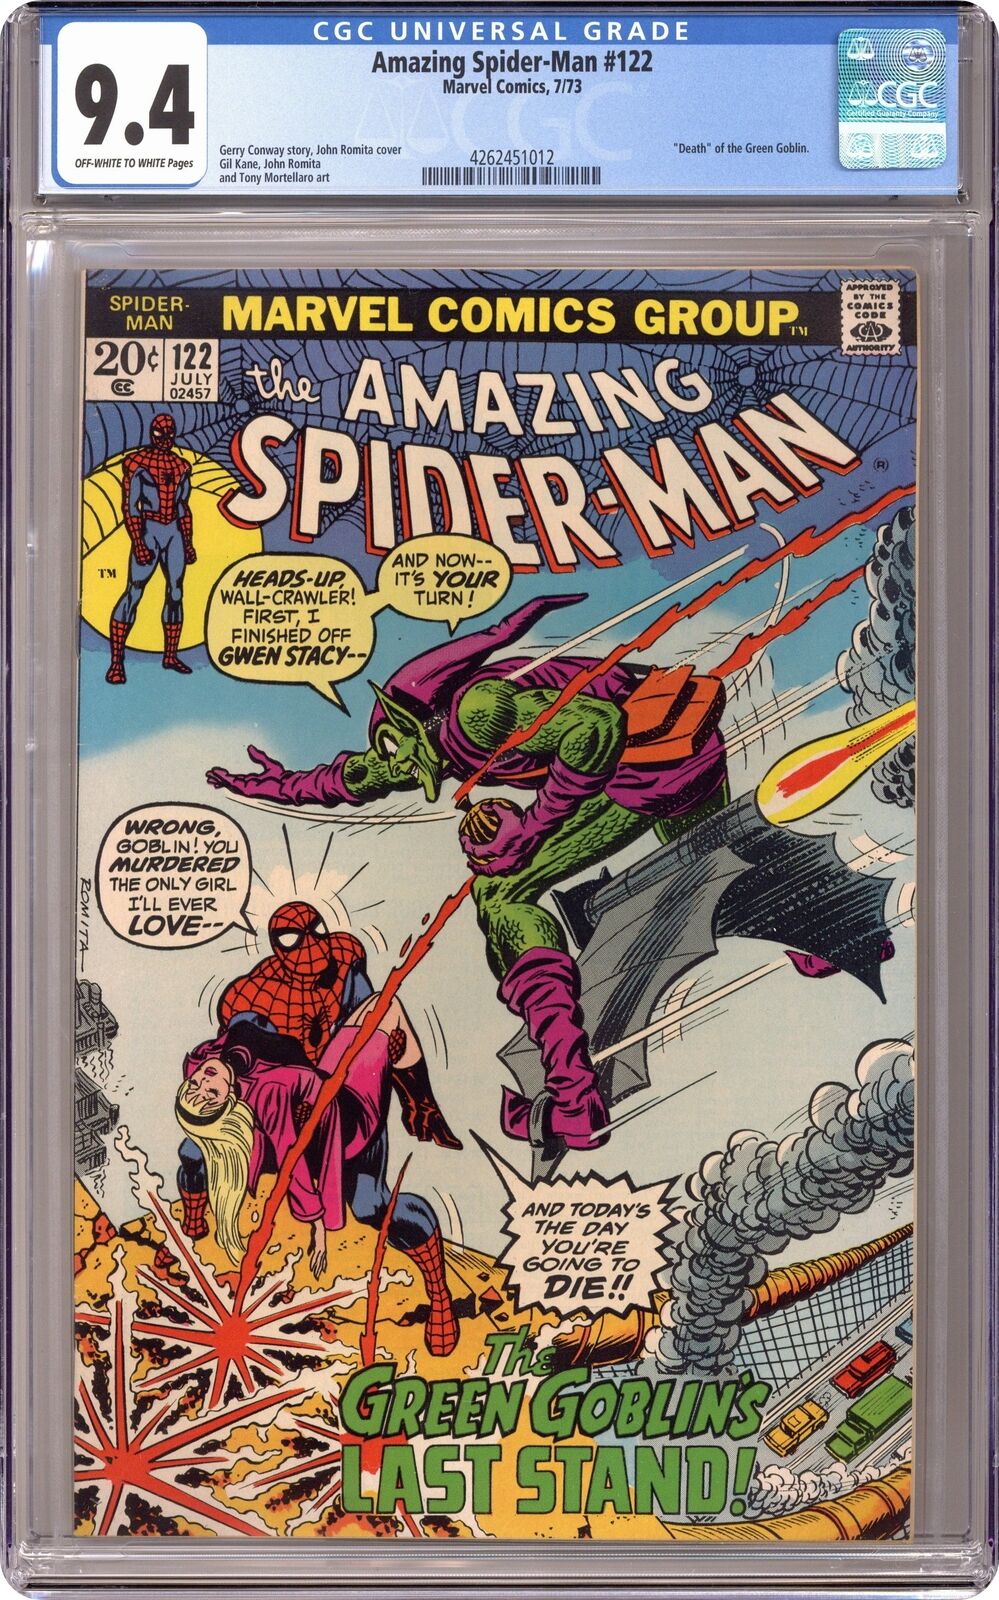 Amazing Spider-Man #122 CGC 9.4 1973 4262451012